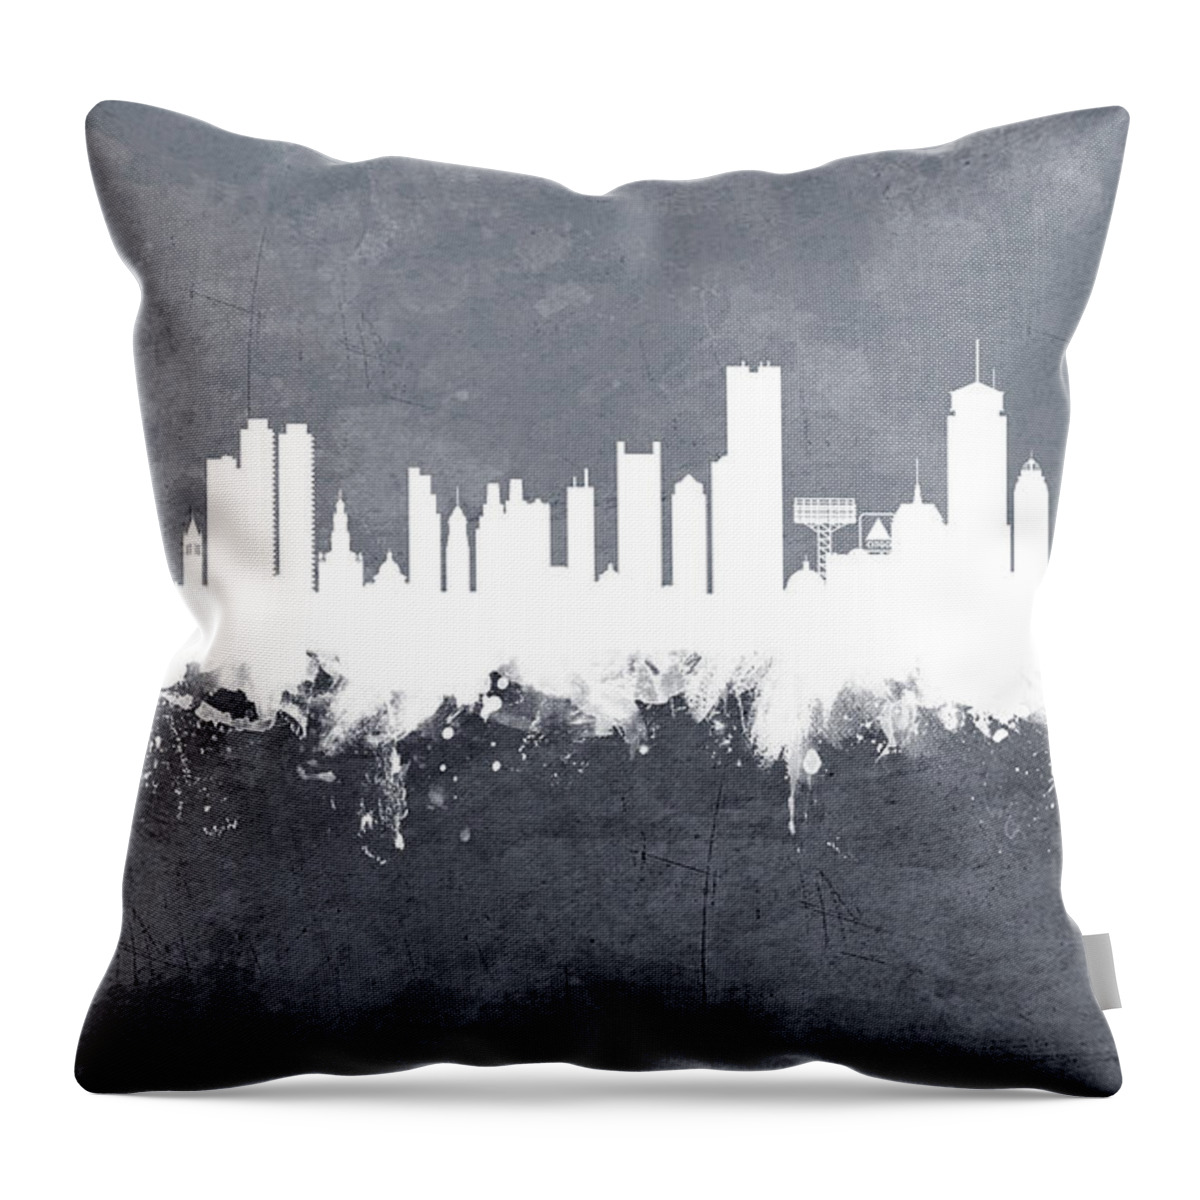 Boston Throw Pillow featuring the digital art Boston Massachusetts Skyline by Michael Tompsett